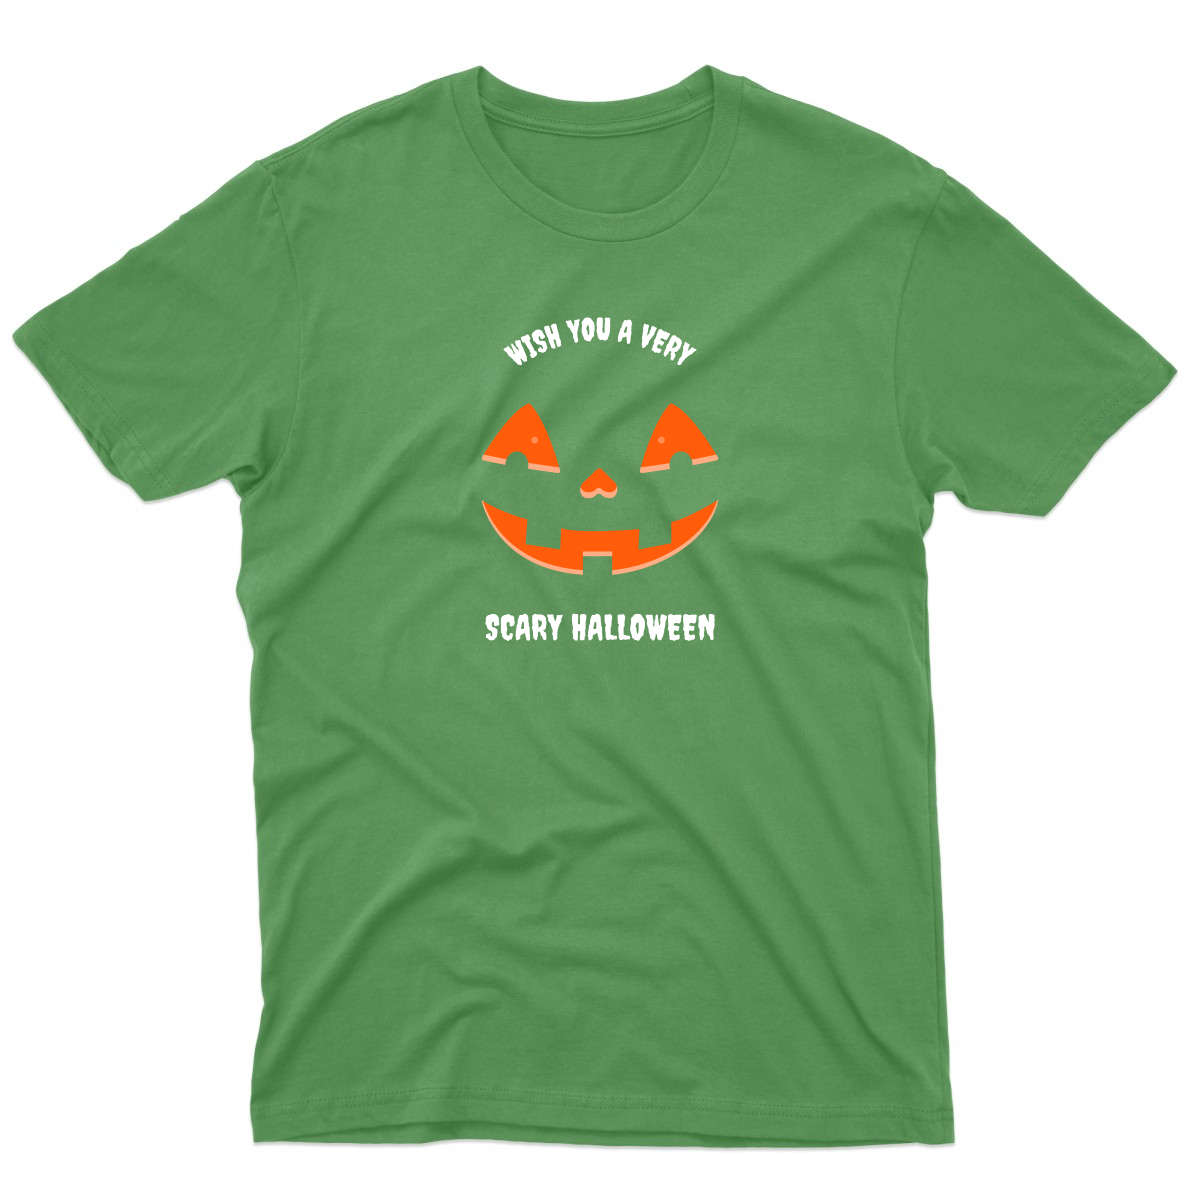 Wish You a Very Scary Halloween Men's T-shirt | Green